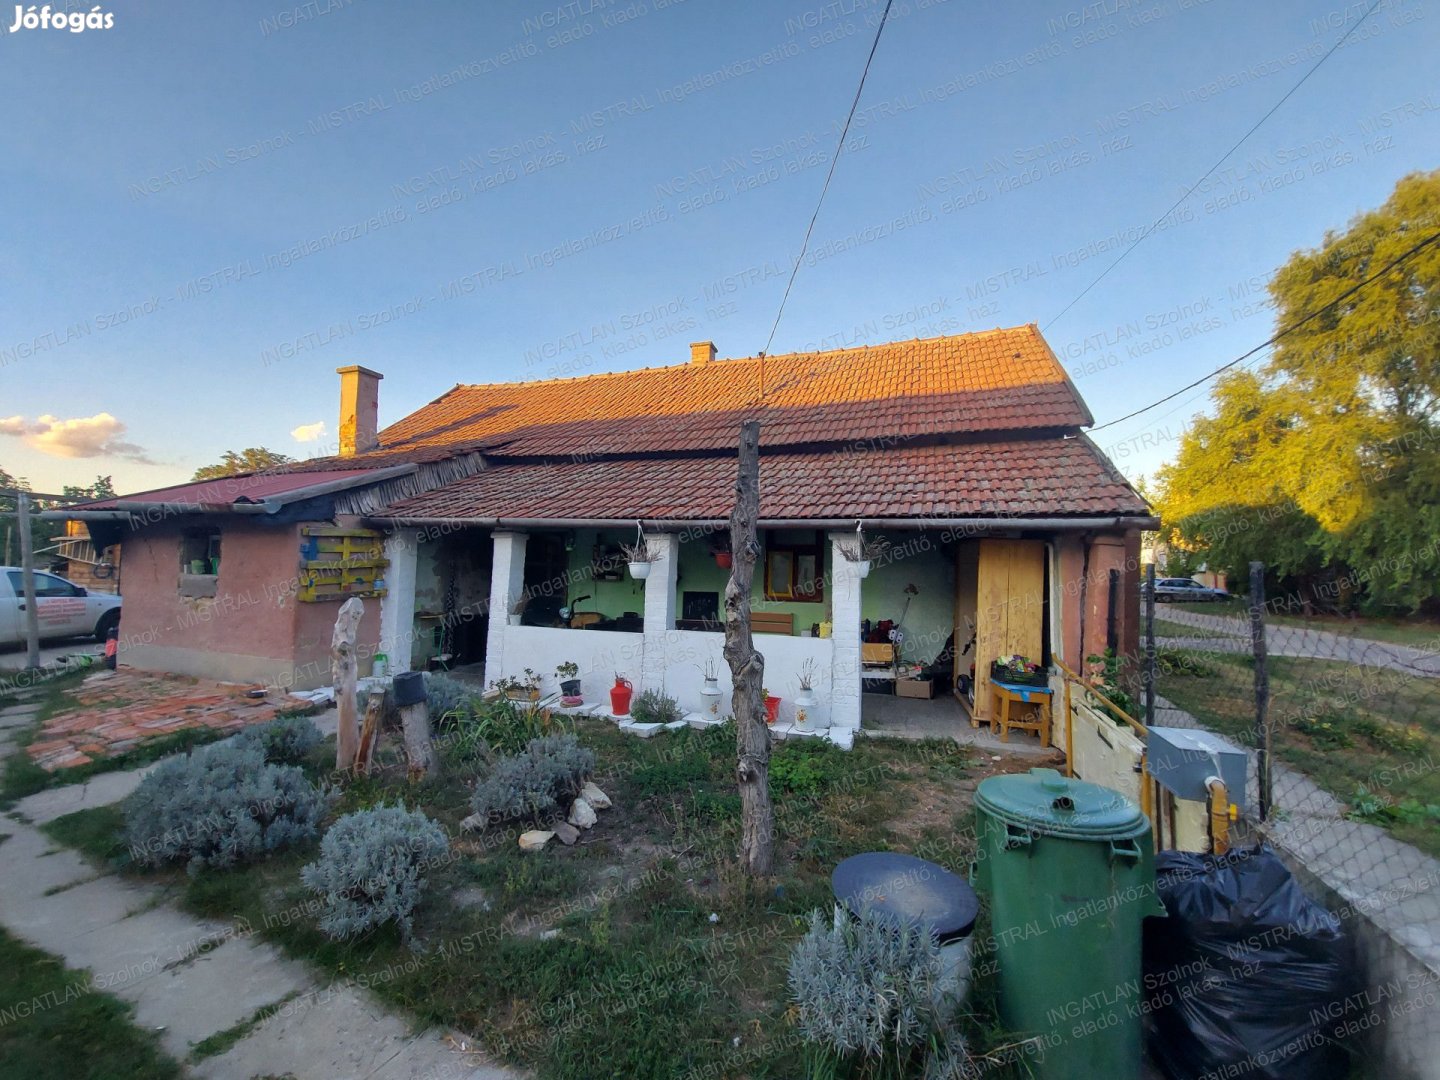 Kis faluban kis ház új tulajdonosra vár!